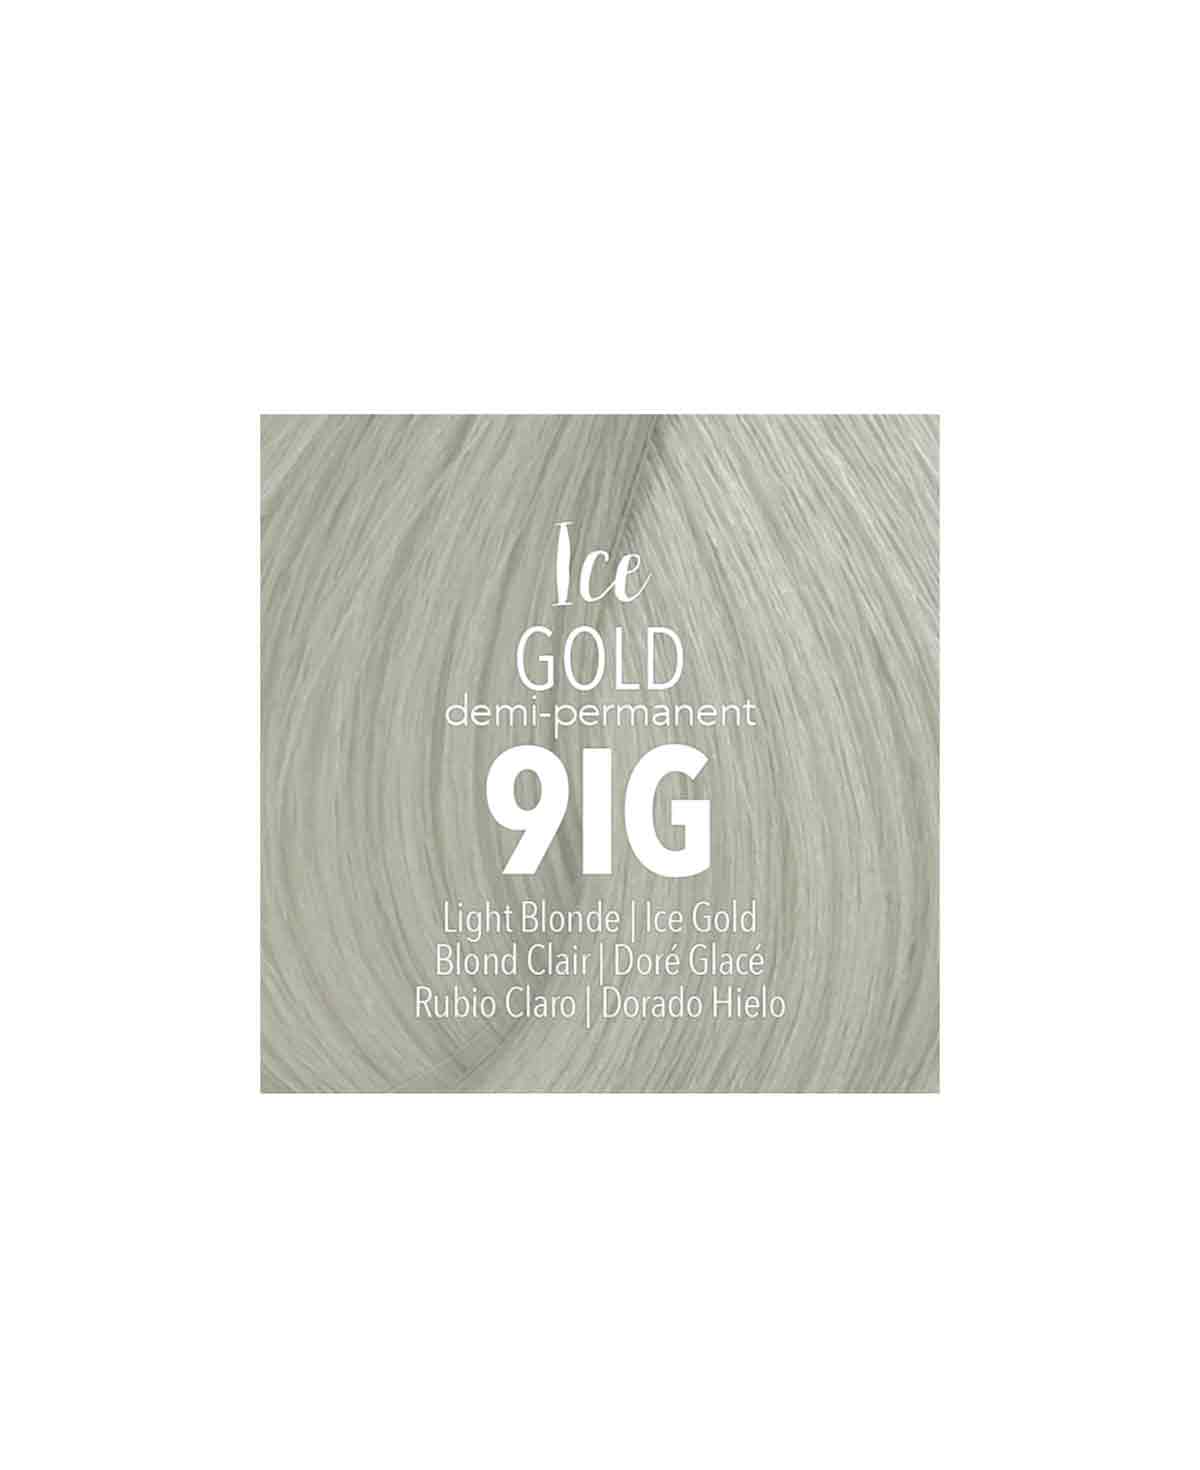 Mydentity - 9IG Light Blonde Ice Gold Demi-P